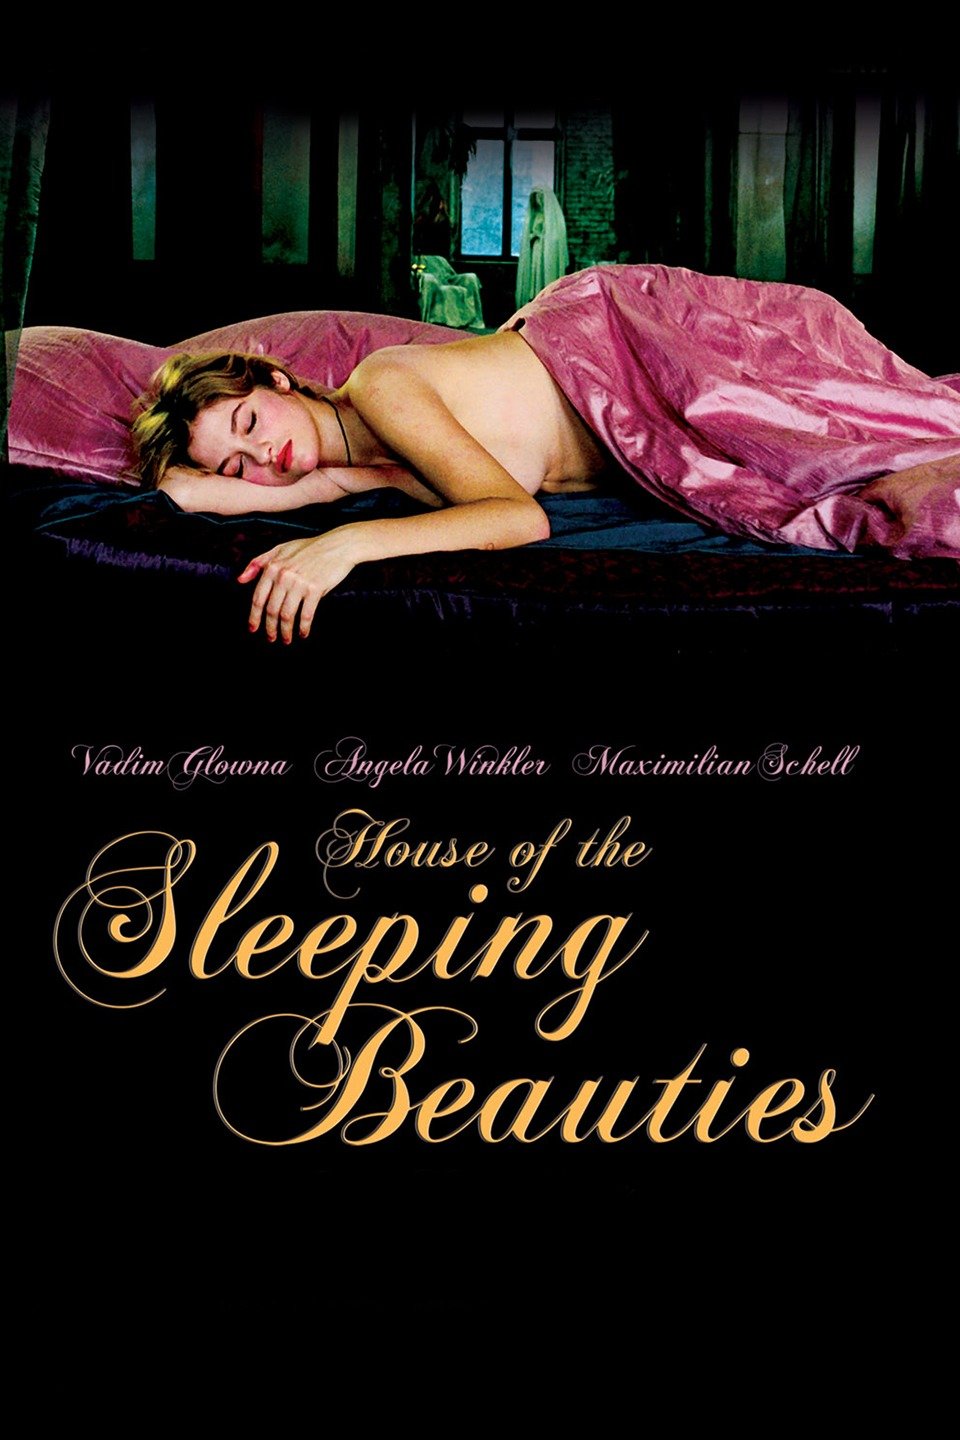 Japanese Beauties Sleeping - House of the Sleeping Beauties - Rotten Tomatoes